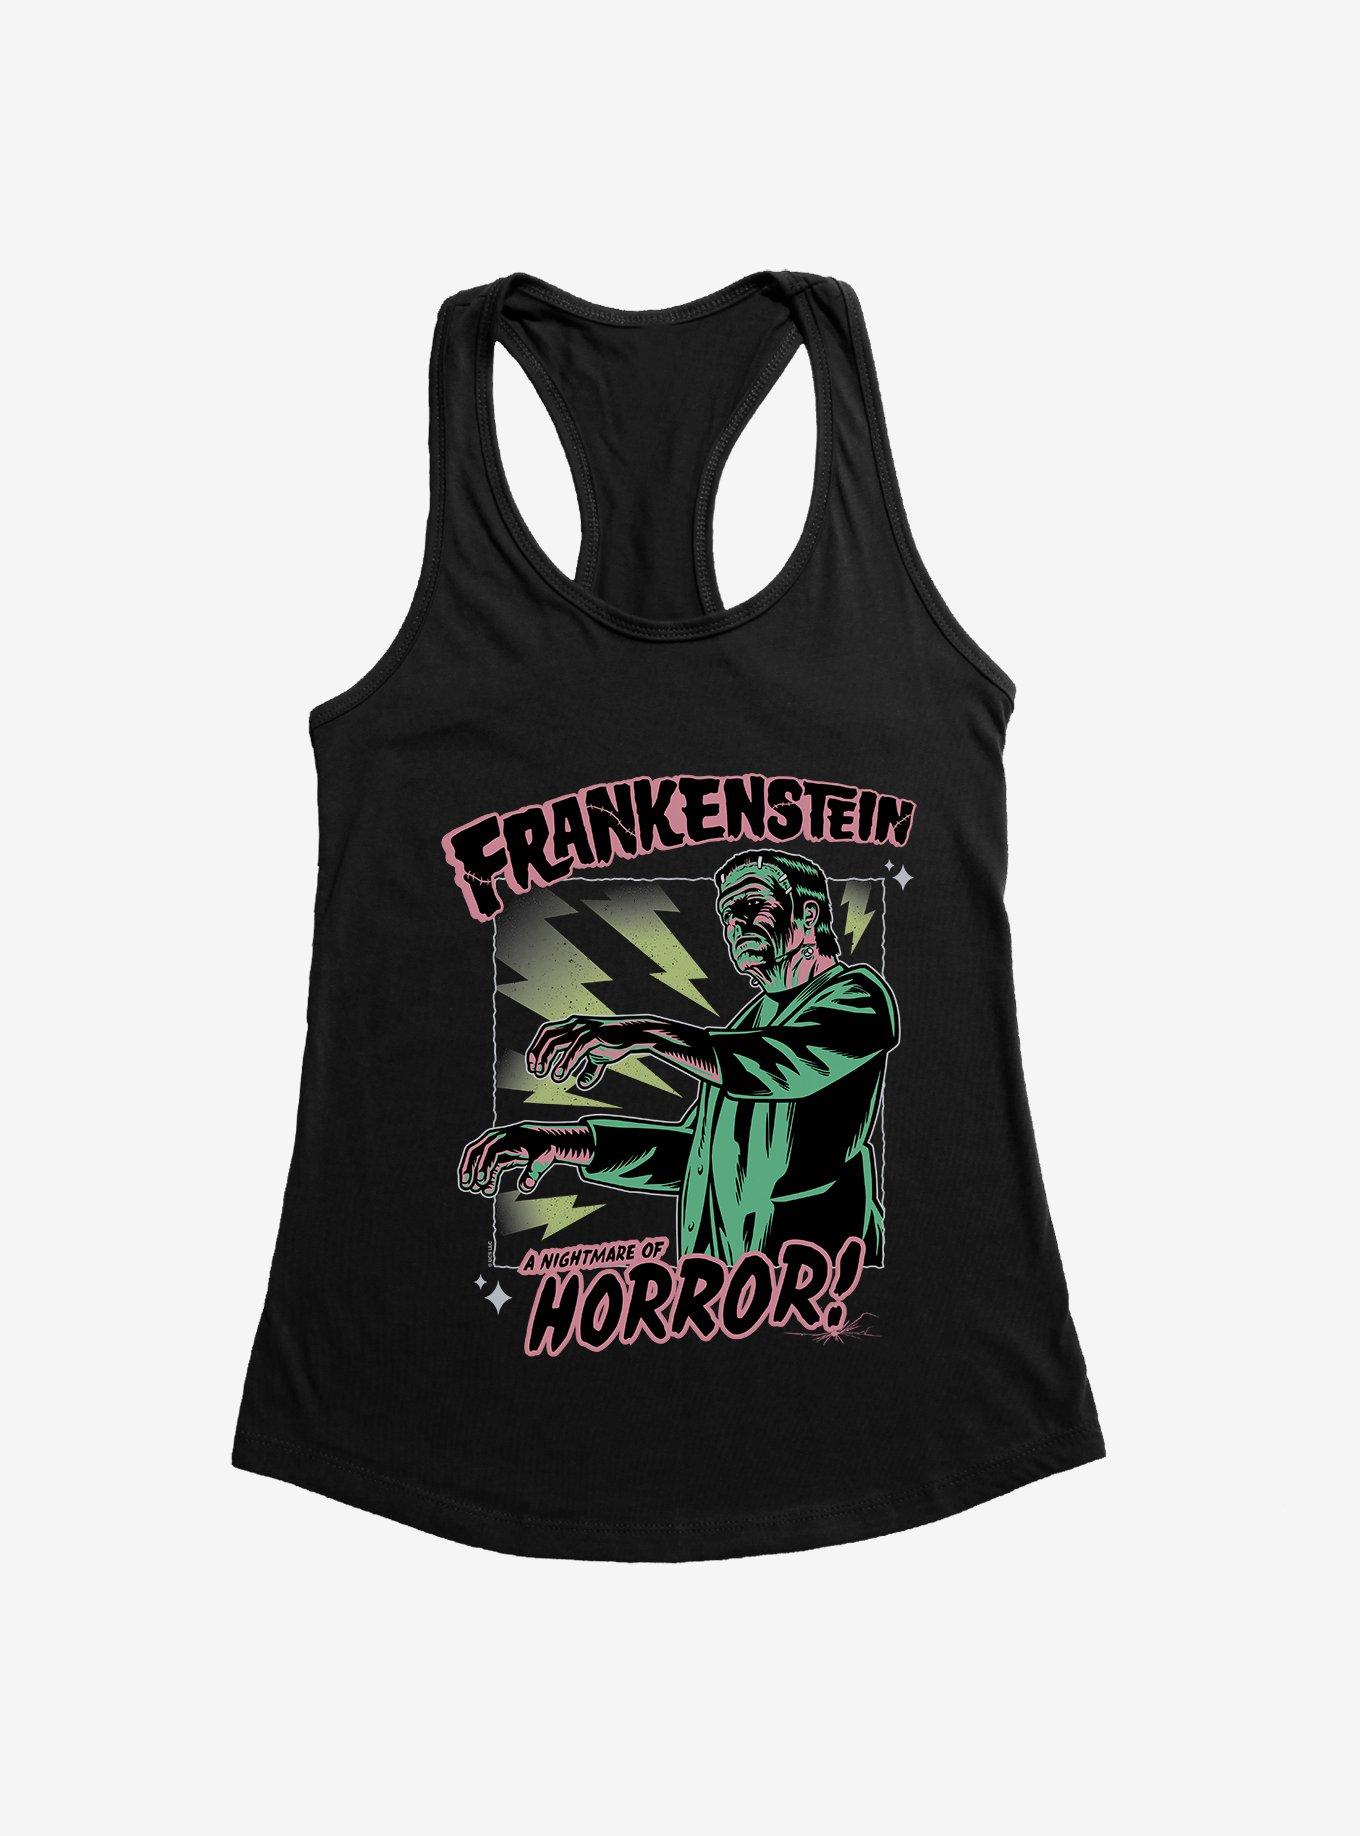 Universal Monsters Frankenstein Nightmare Of Horror Girls Tank, BLACK, hi-res